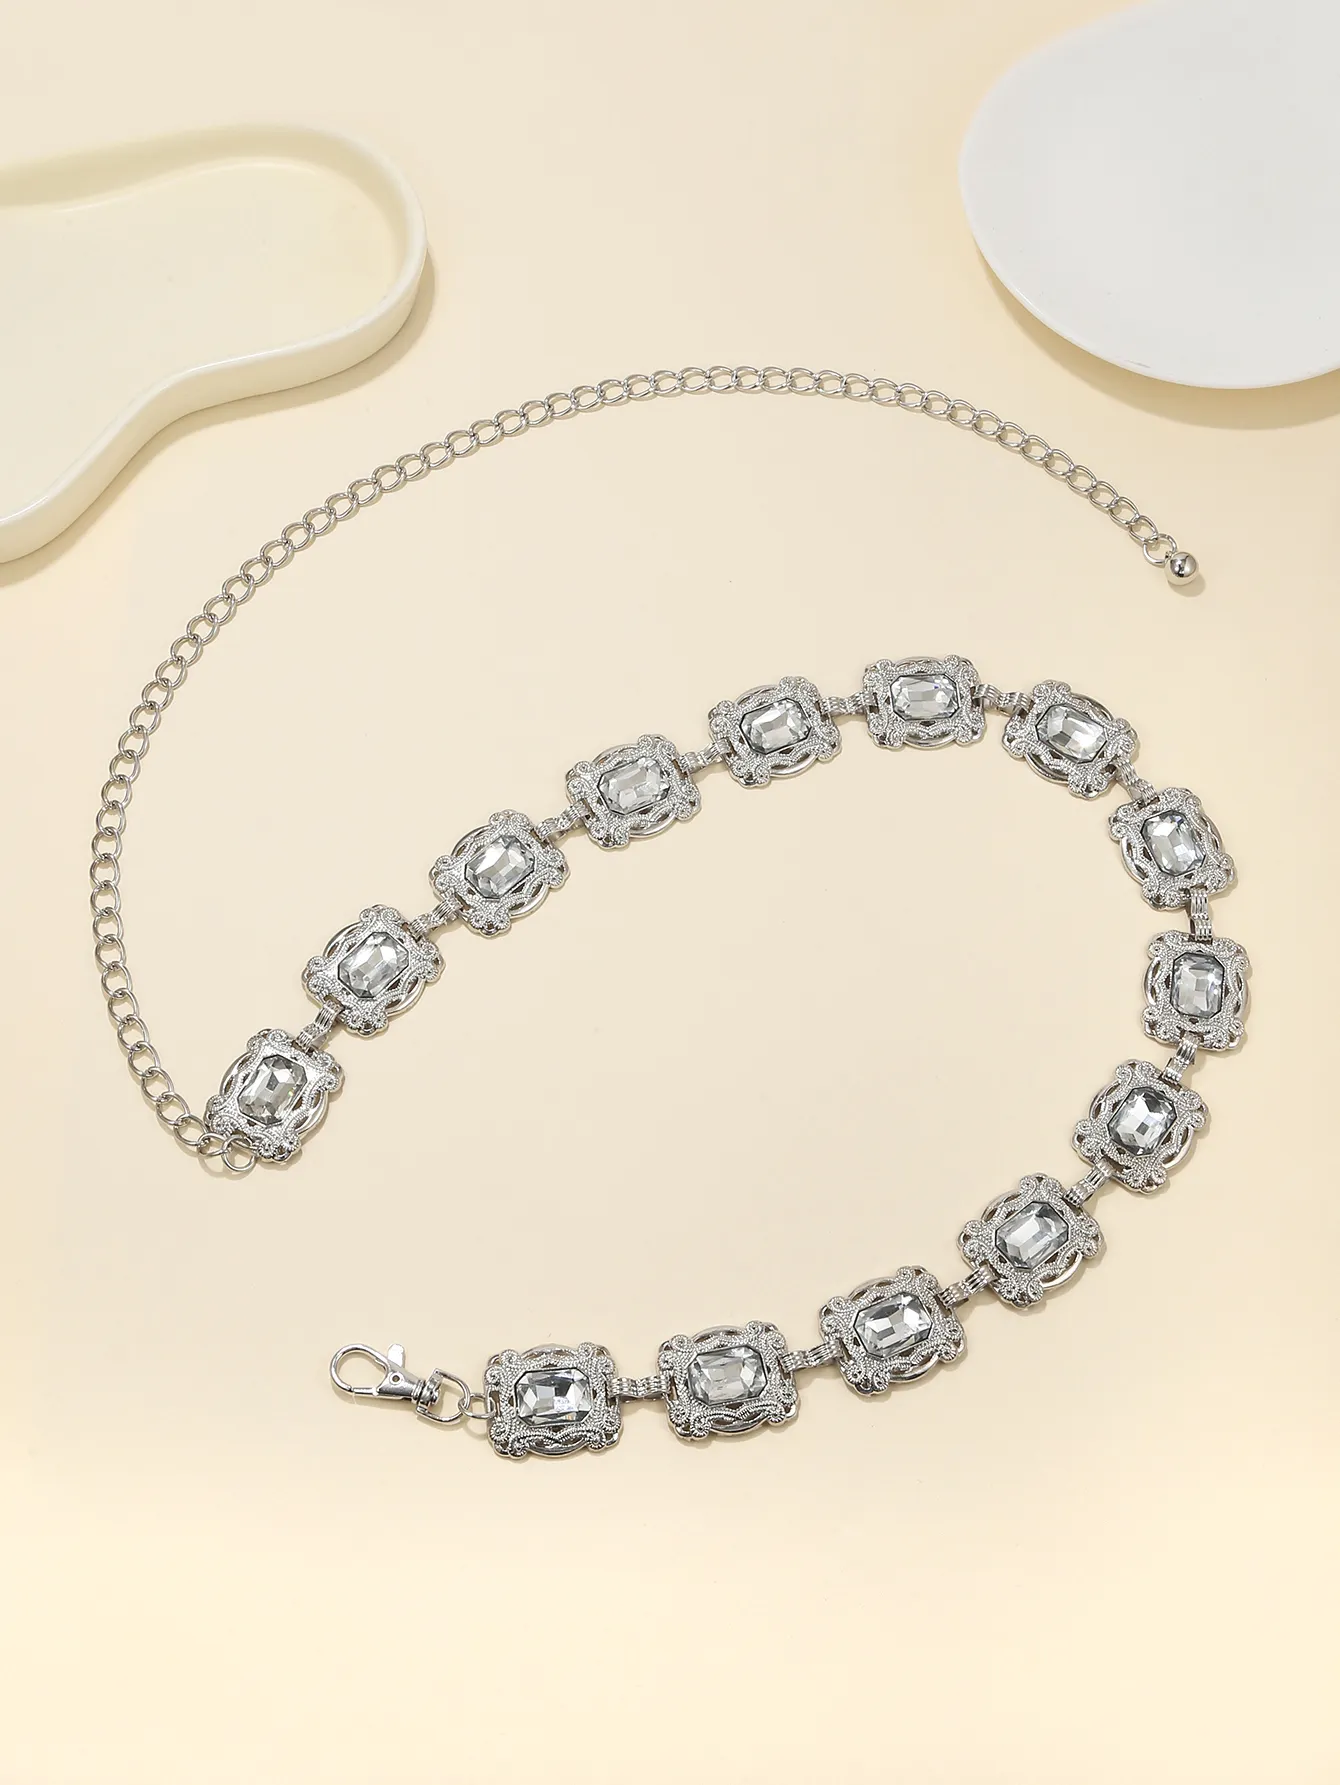 Fashionable Waist Accessories Silver Jewelry Rhinestone Wedding Belt Temperament Bridal Dress Waist Belt